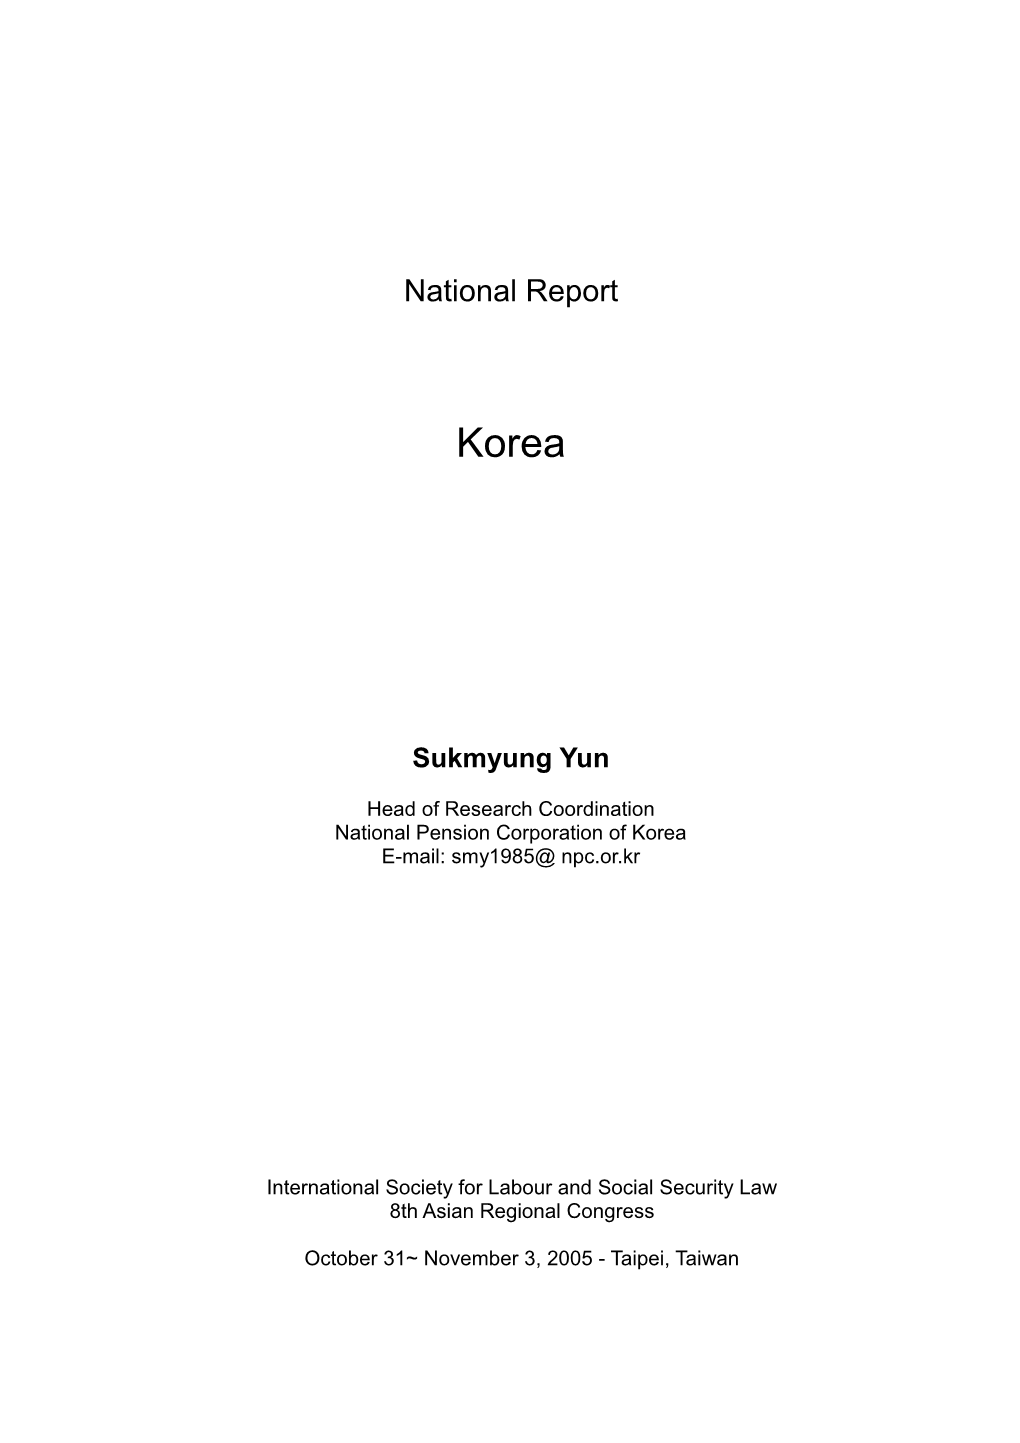 The National Report : Korea